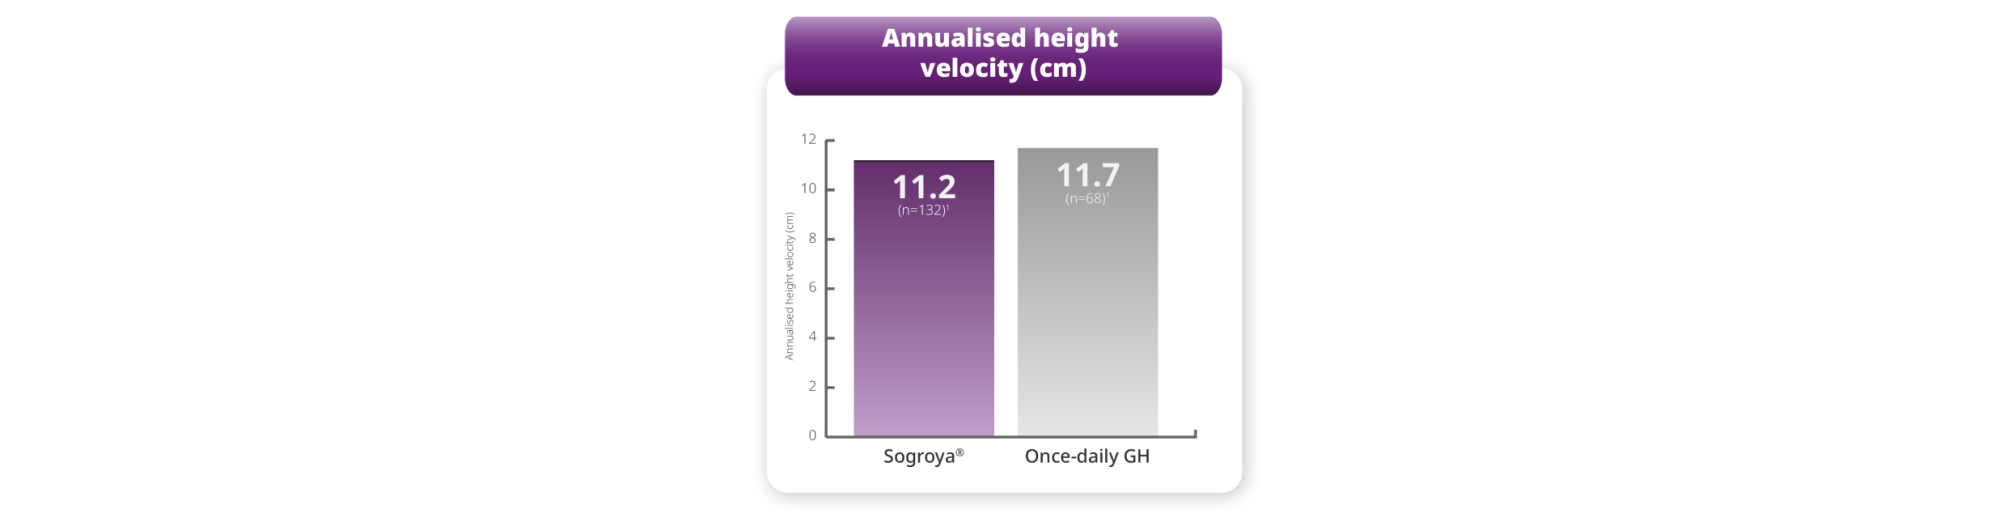 Annualised height velocity